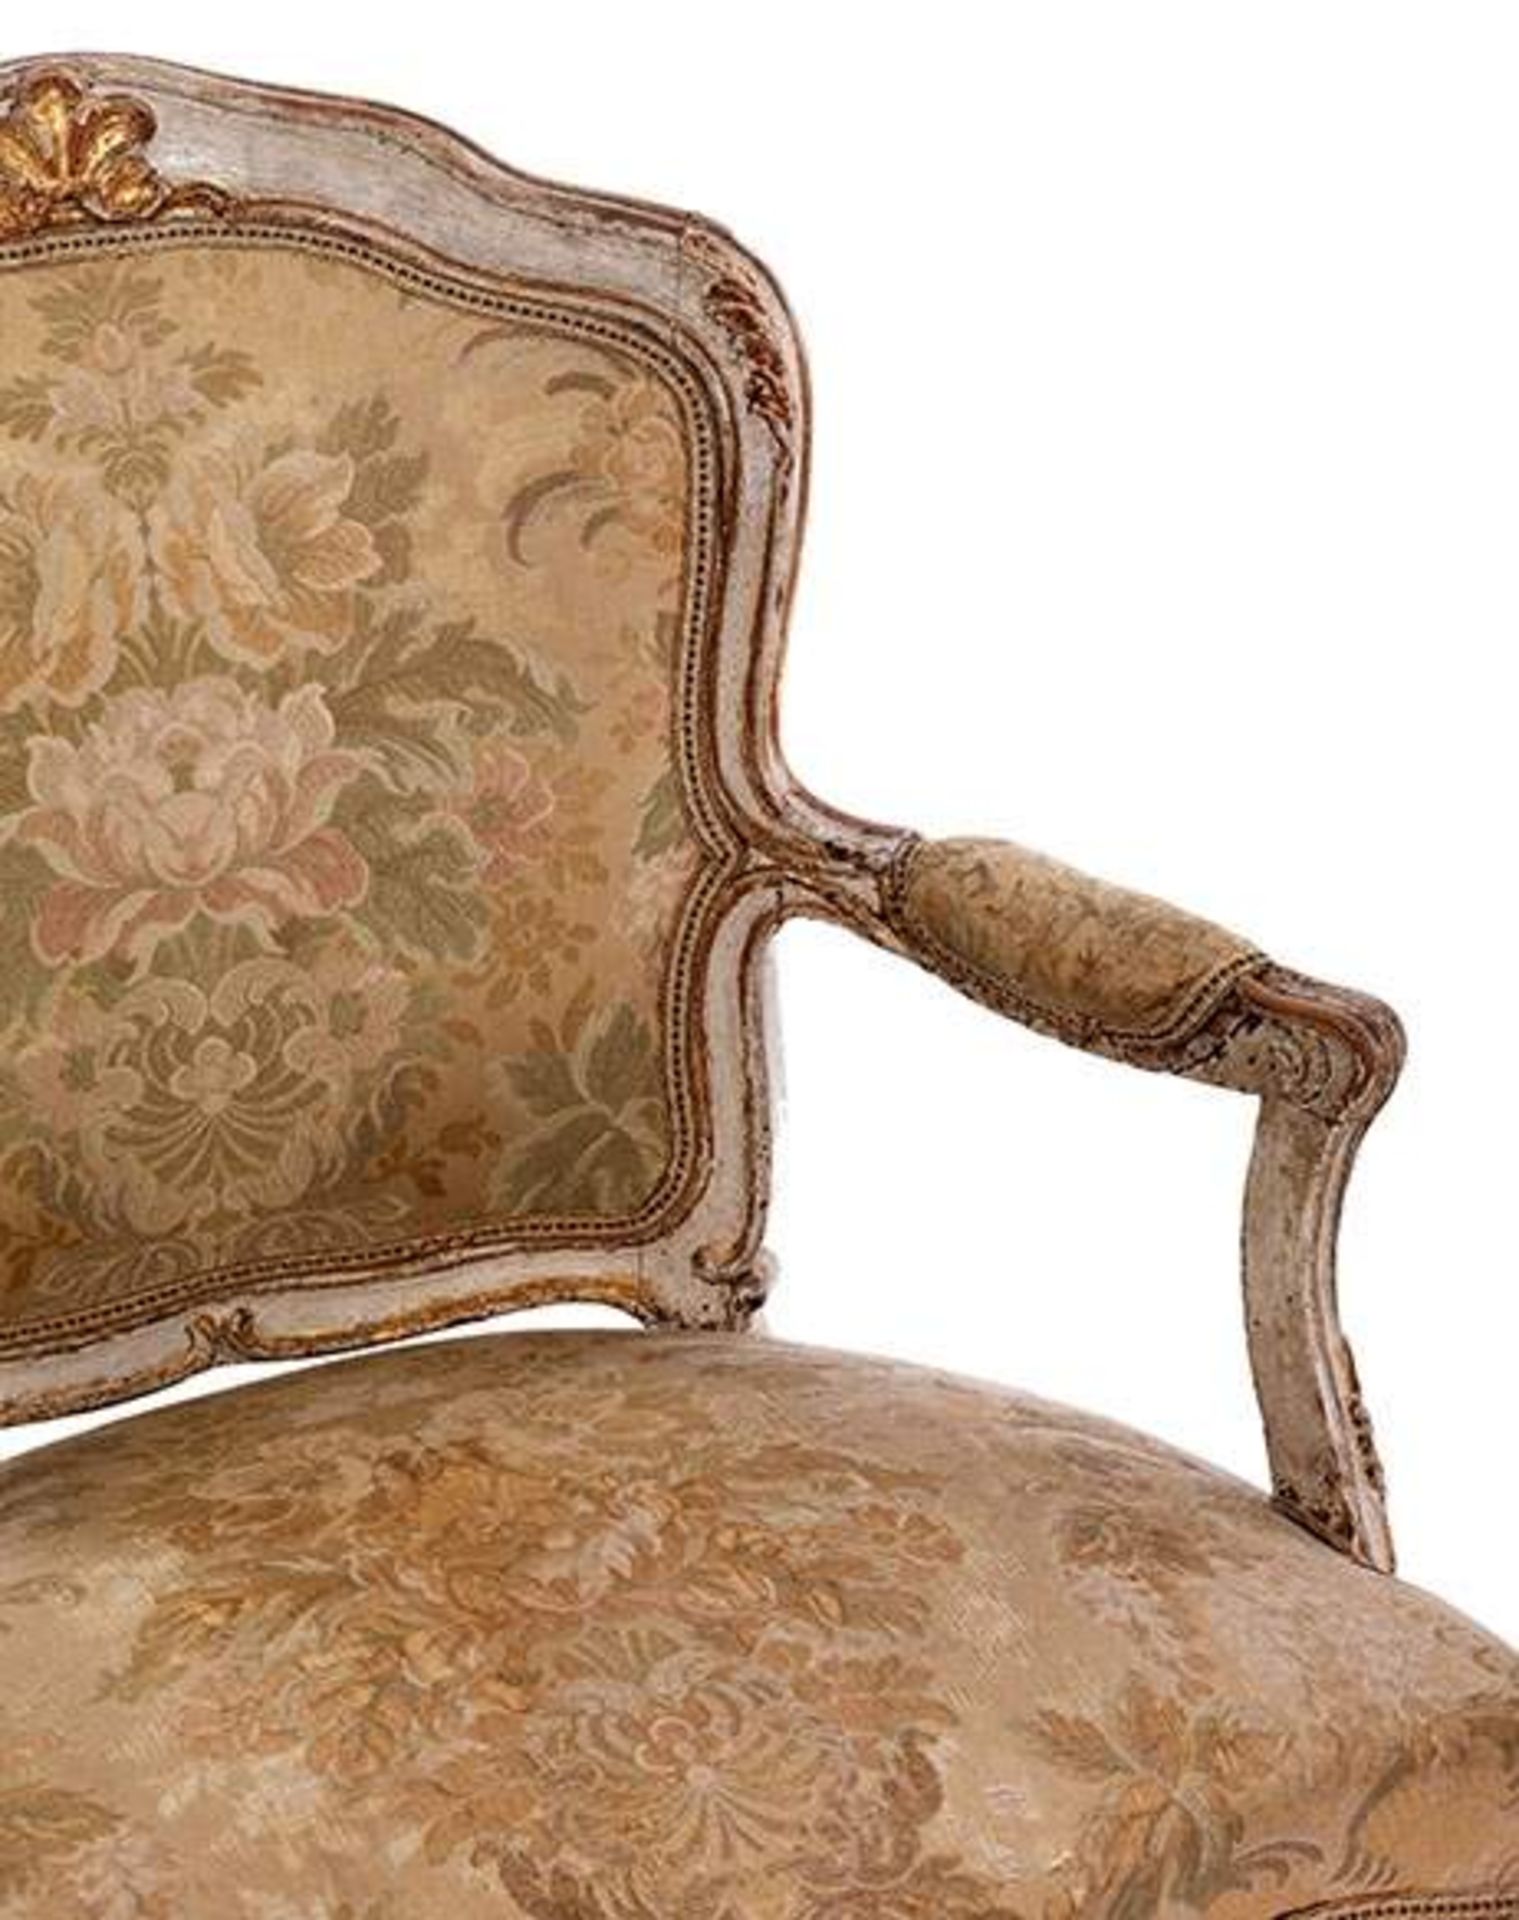 Pair of small armchairsHeight: 87 cm. Width: ca. 67 cm. Depth: ca. 50 cm. France, 18th century. - Bild 3 aus 5